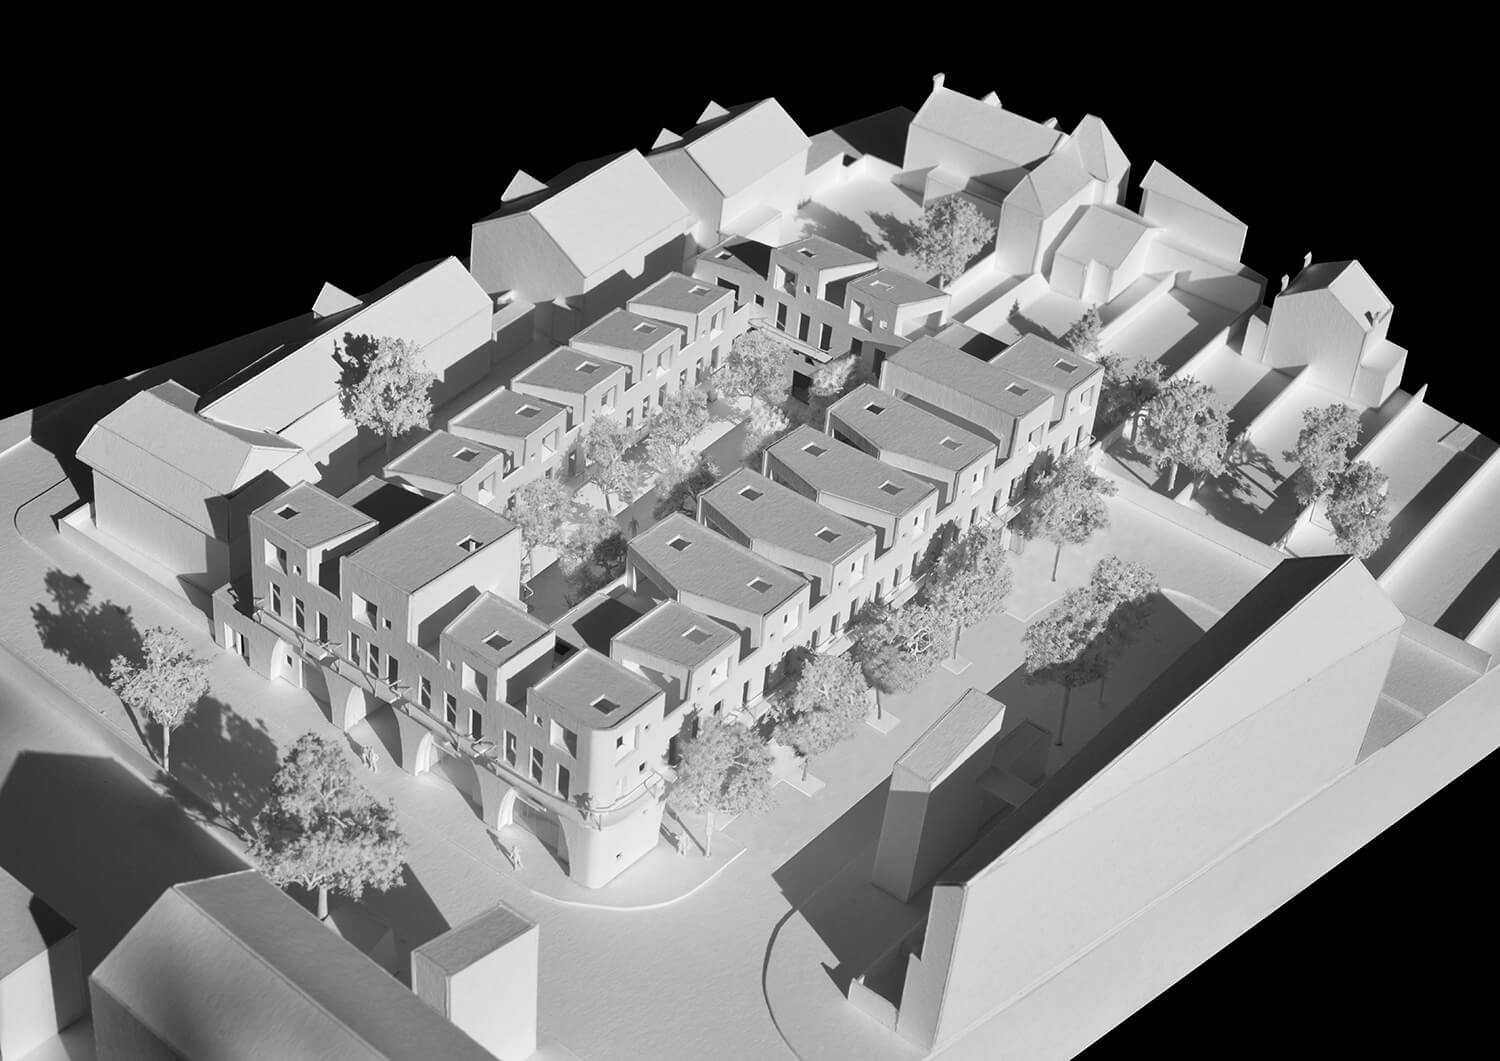 Mcgrath+Road+Social+Housing+_Back+to+Back+to+Back!+Model_+Peter+Barber+Architects.jpg